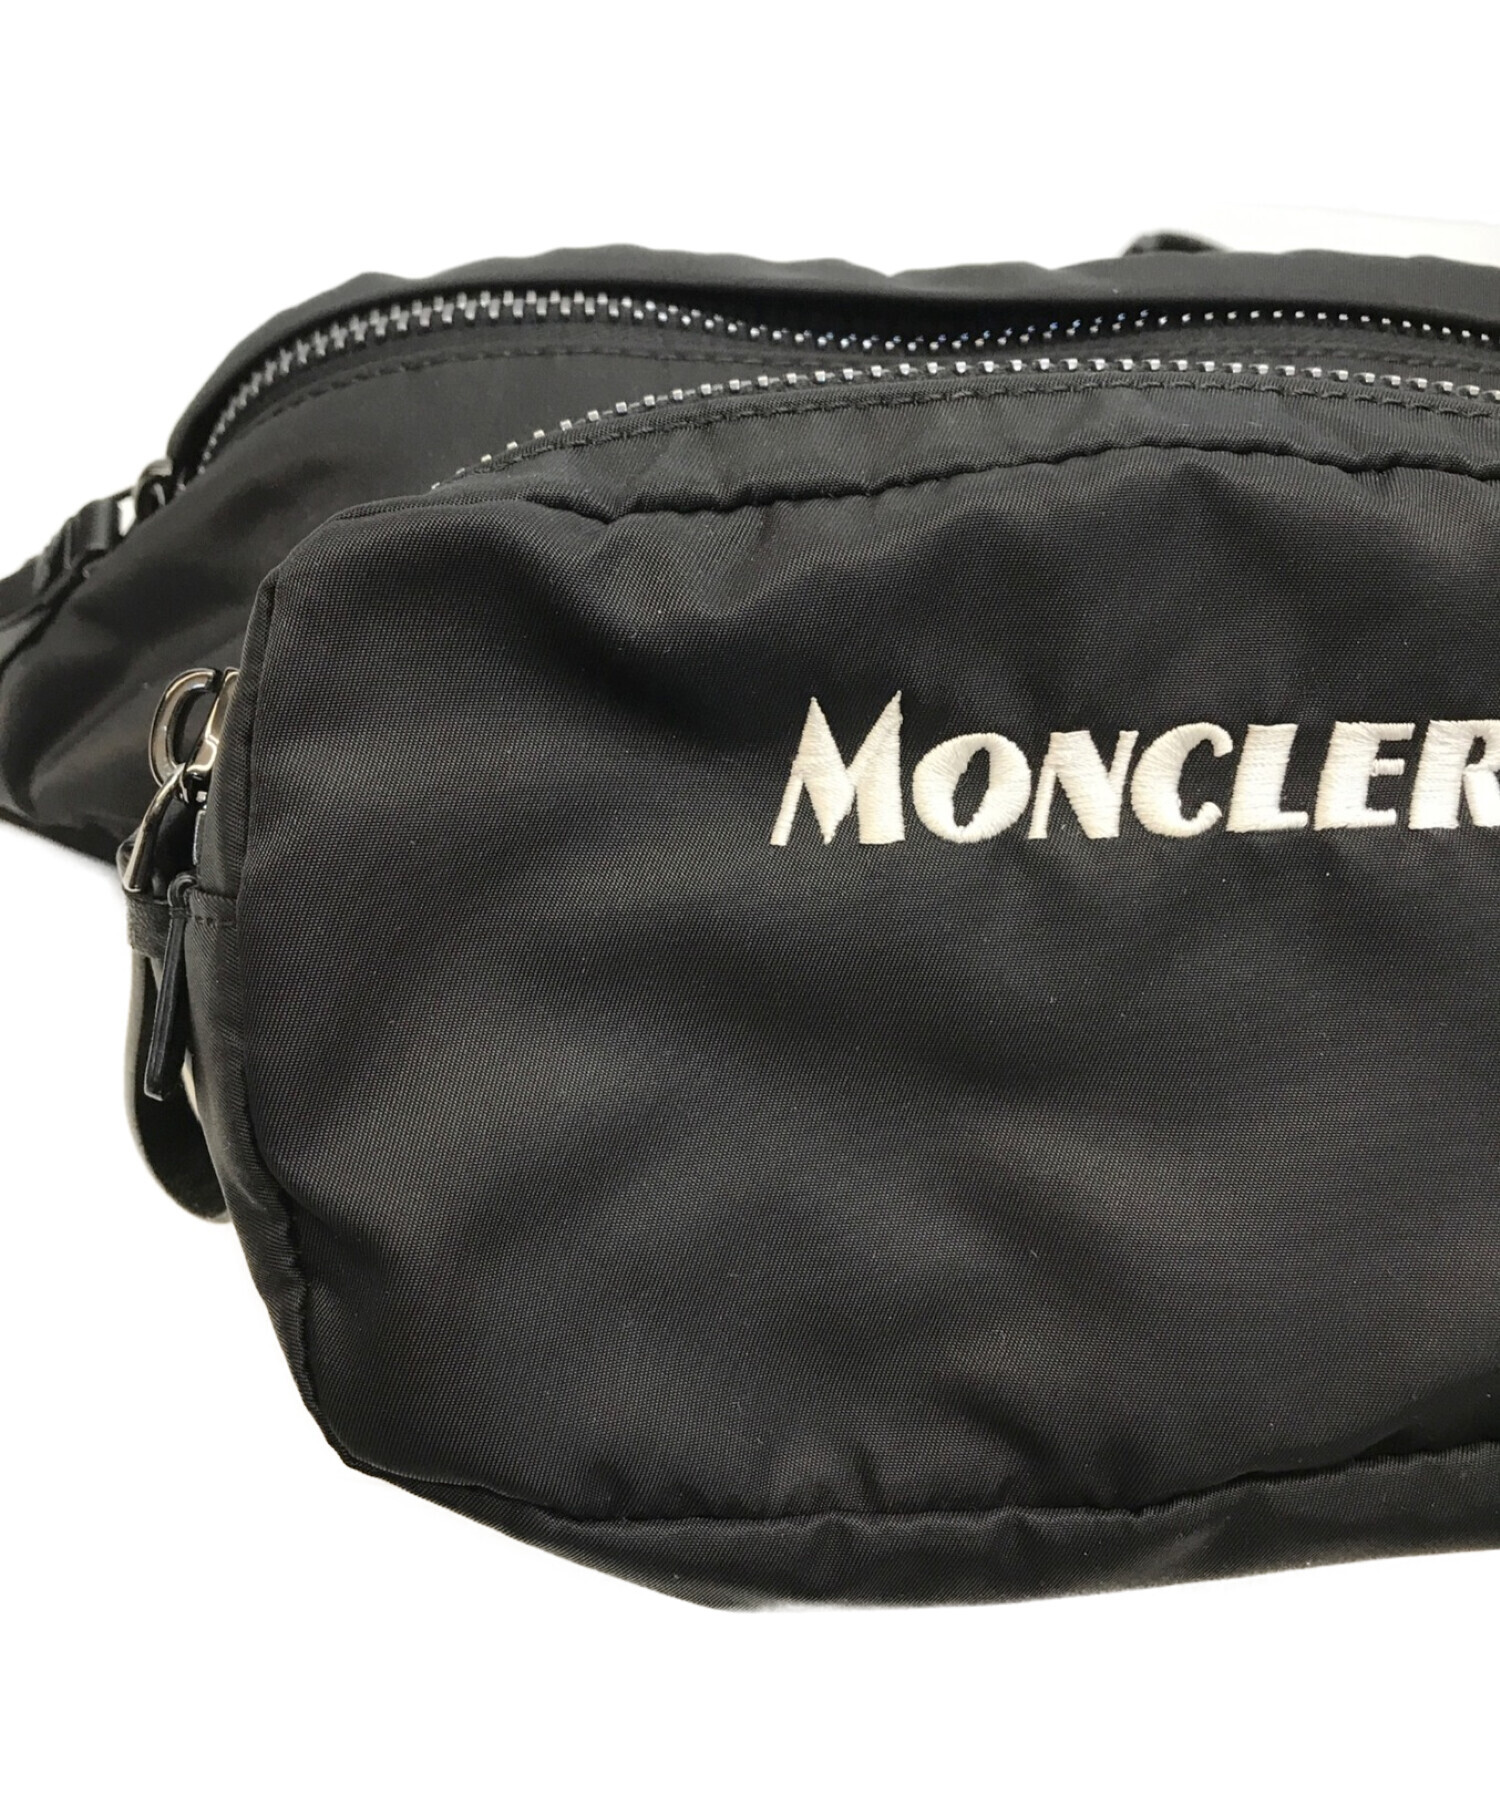 MONCLER (モンクレール) DURANCE BELT BAG　ロゴボディーバッグ ベルトバッグ ブラック